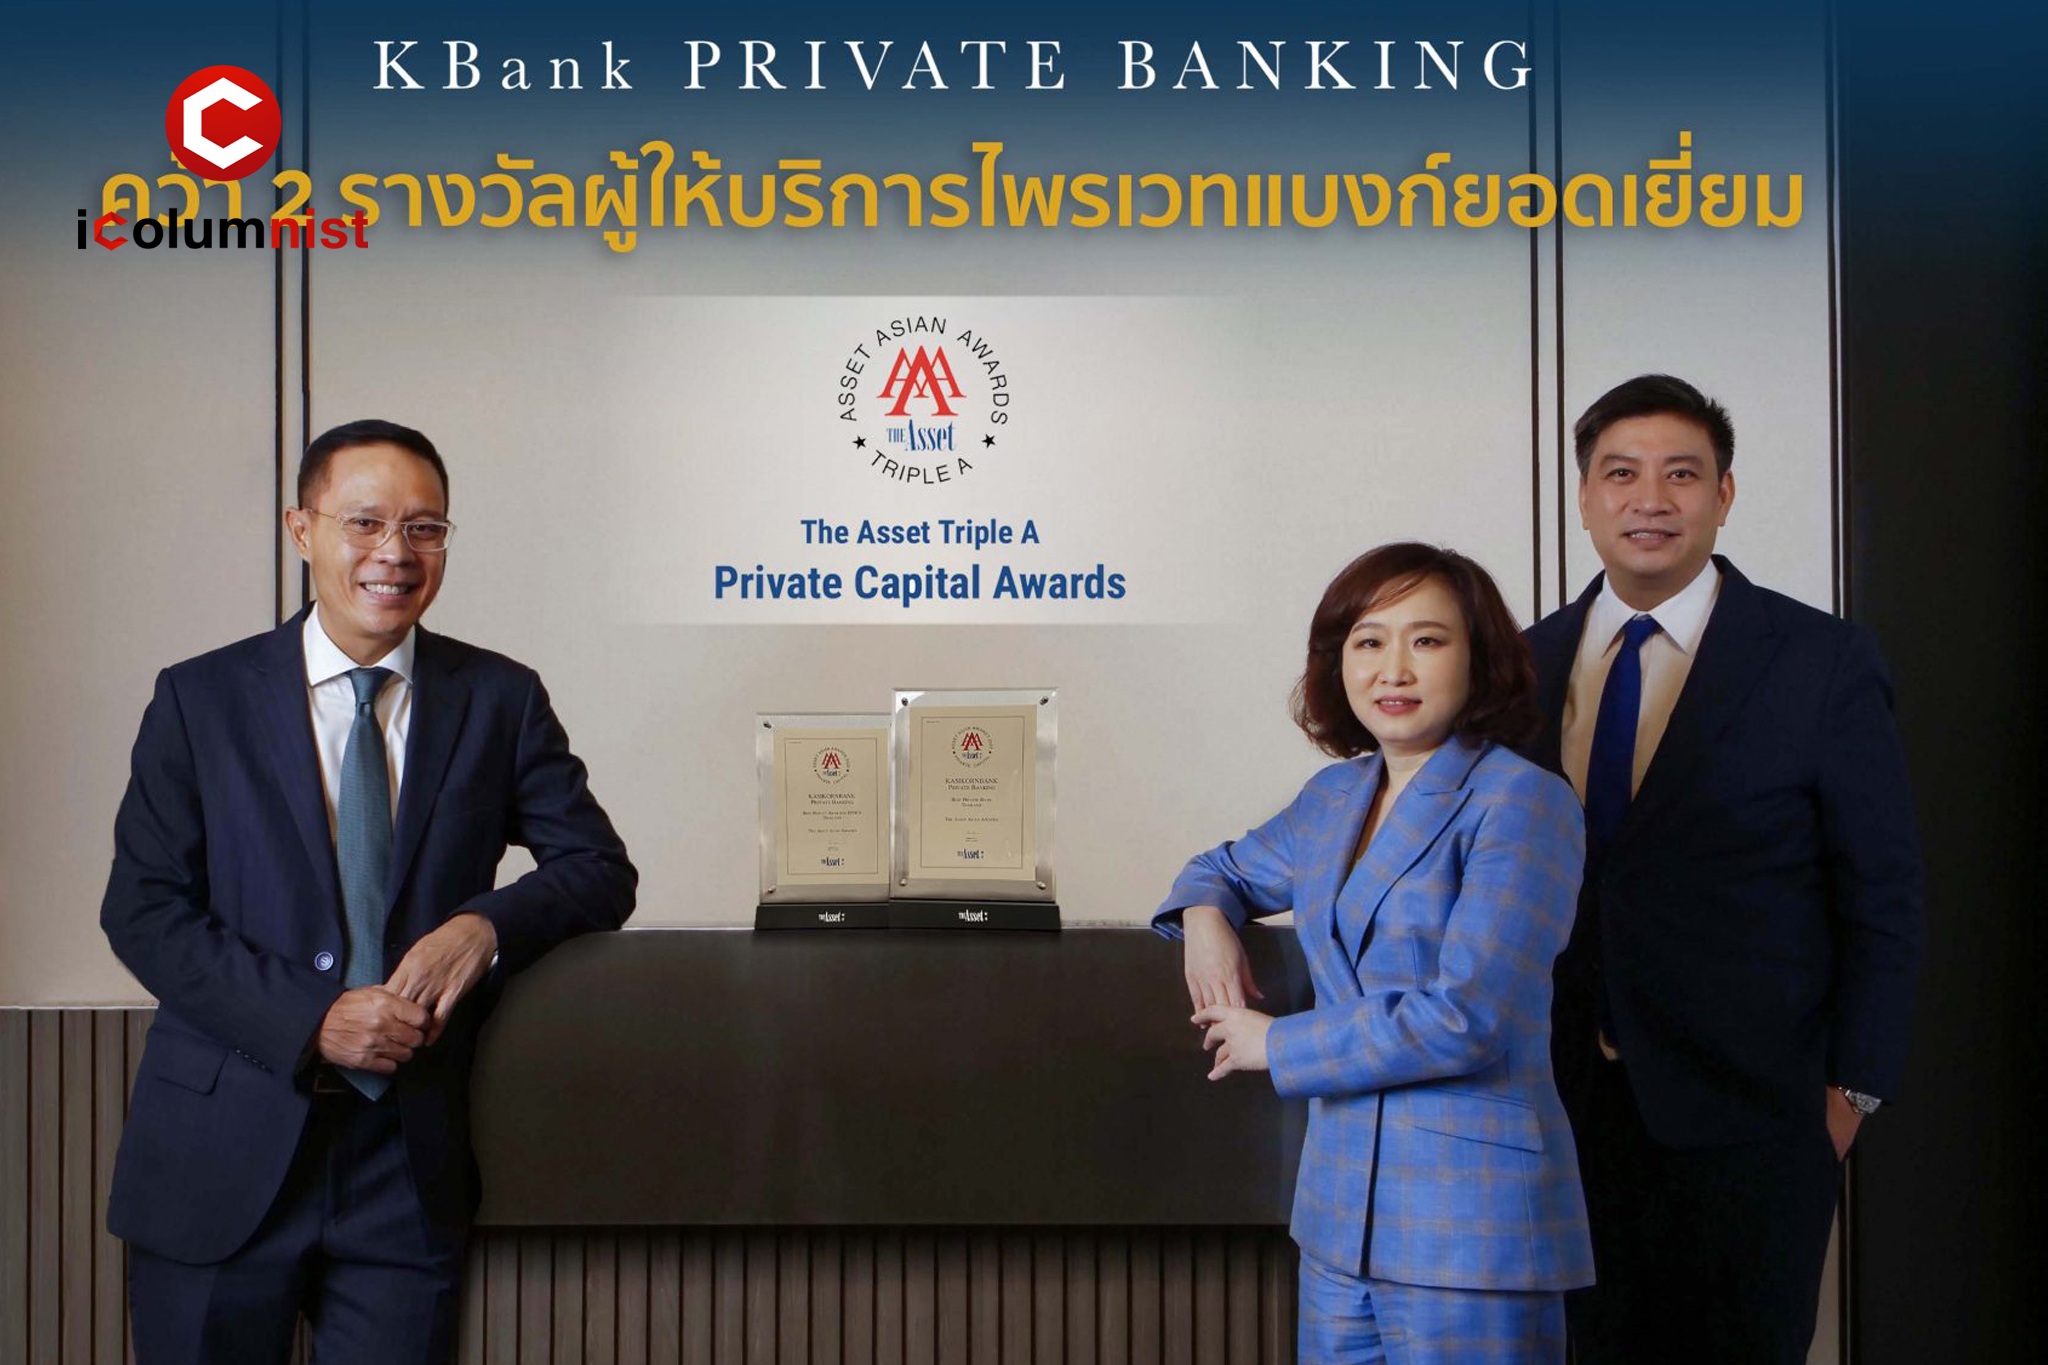  KBank Private Banking เปิดกลยุทธ์ PERFECT WEALTH ความมั่งคั่งที่สมบูรณ์ สู่ความสำเร็จบนเวทีระดับโลก “The Asset Triple A Private Capital Awards 2022”